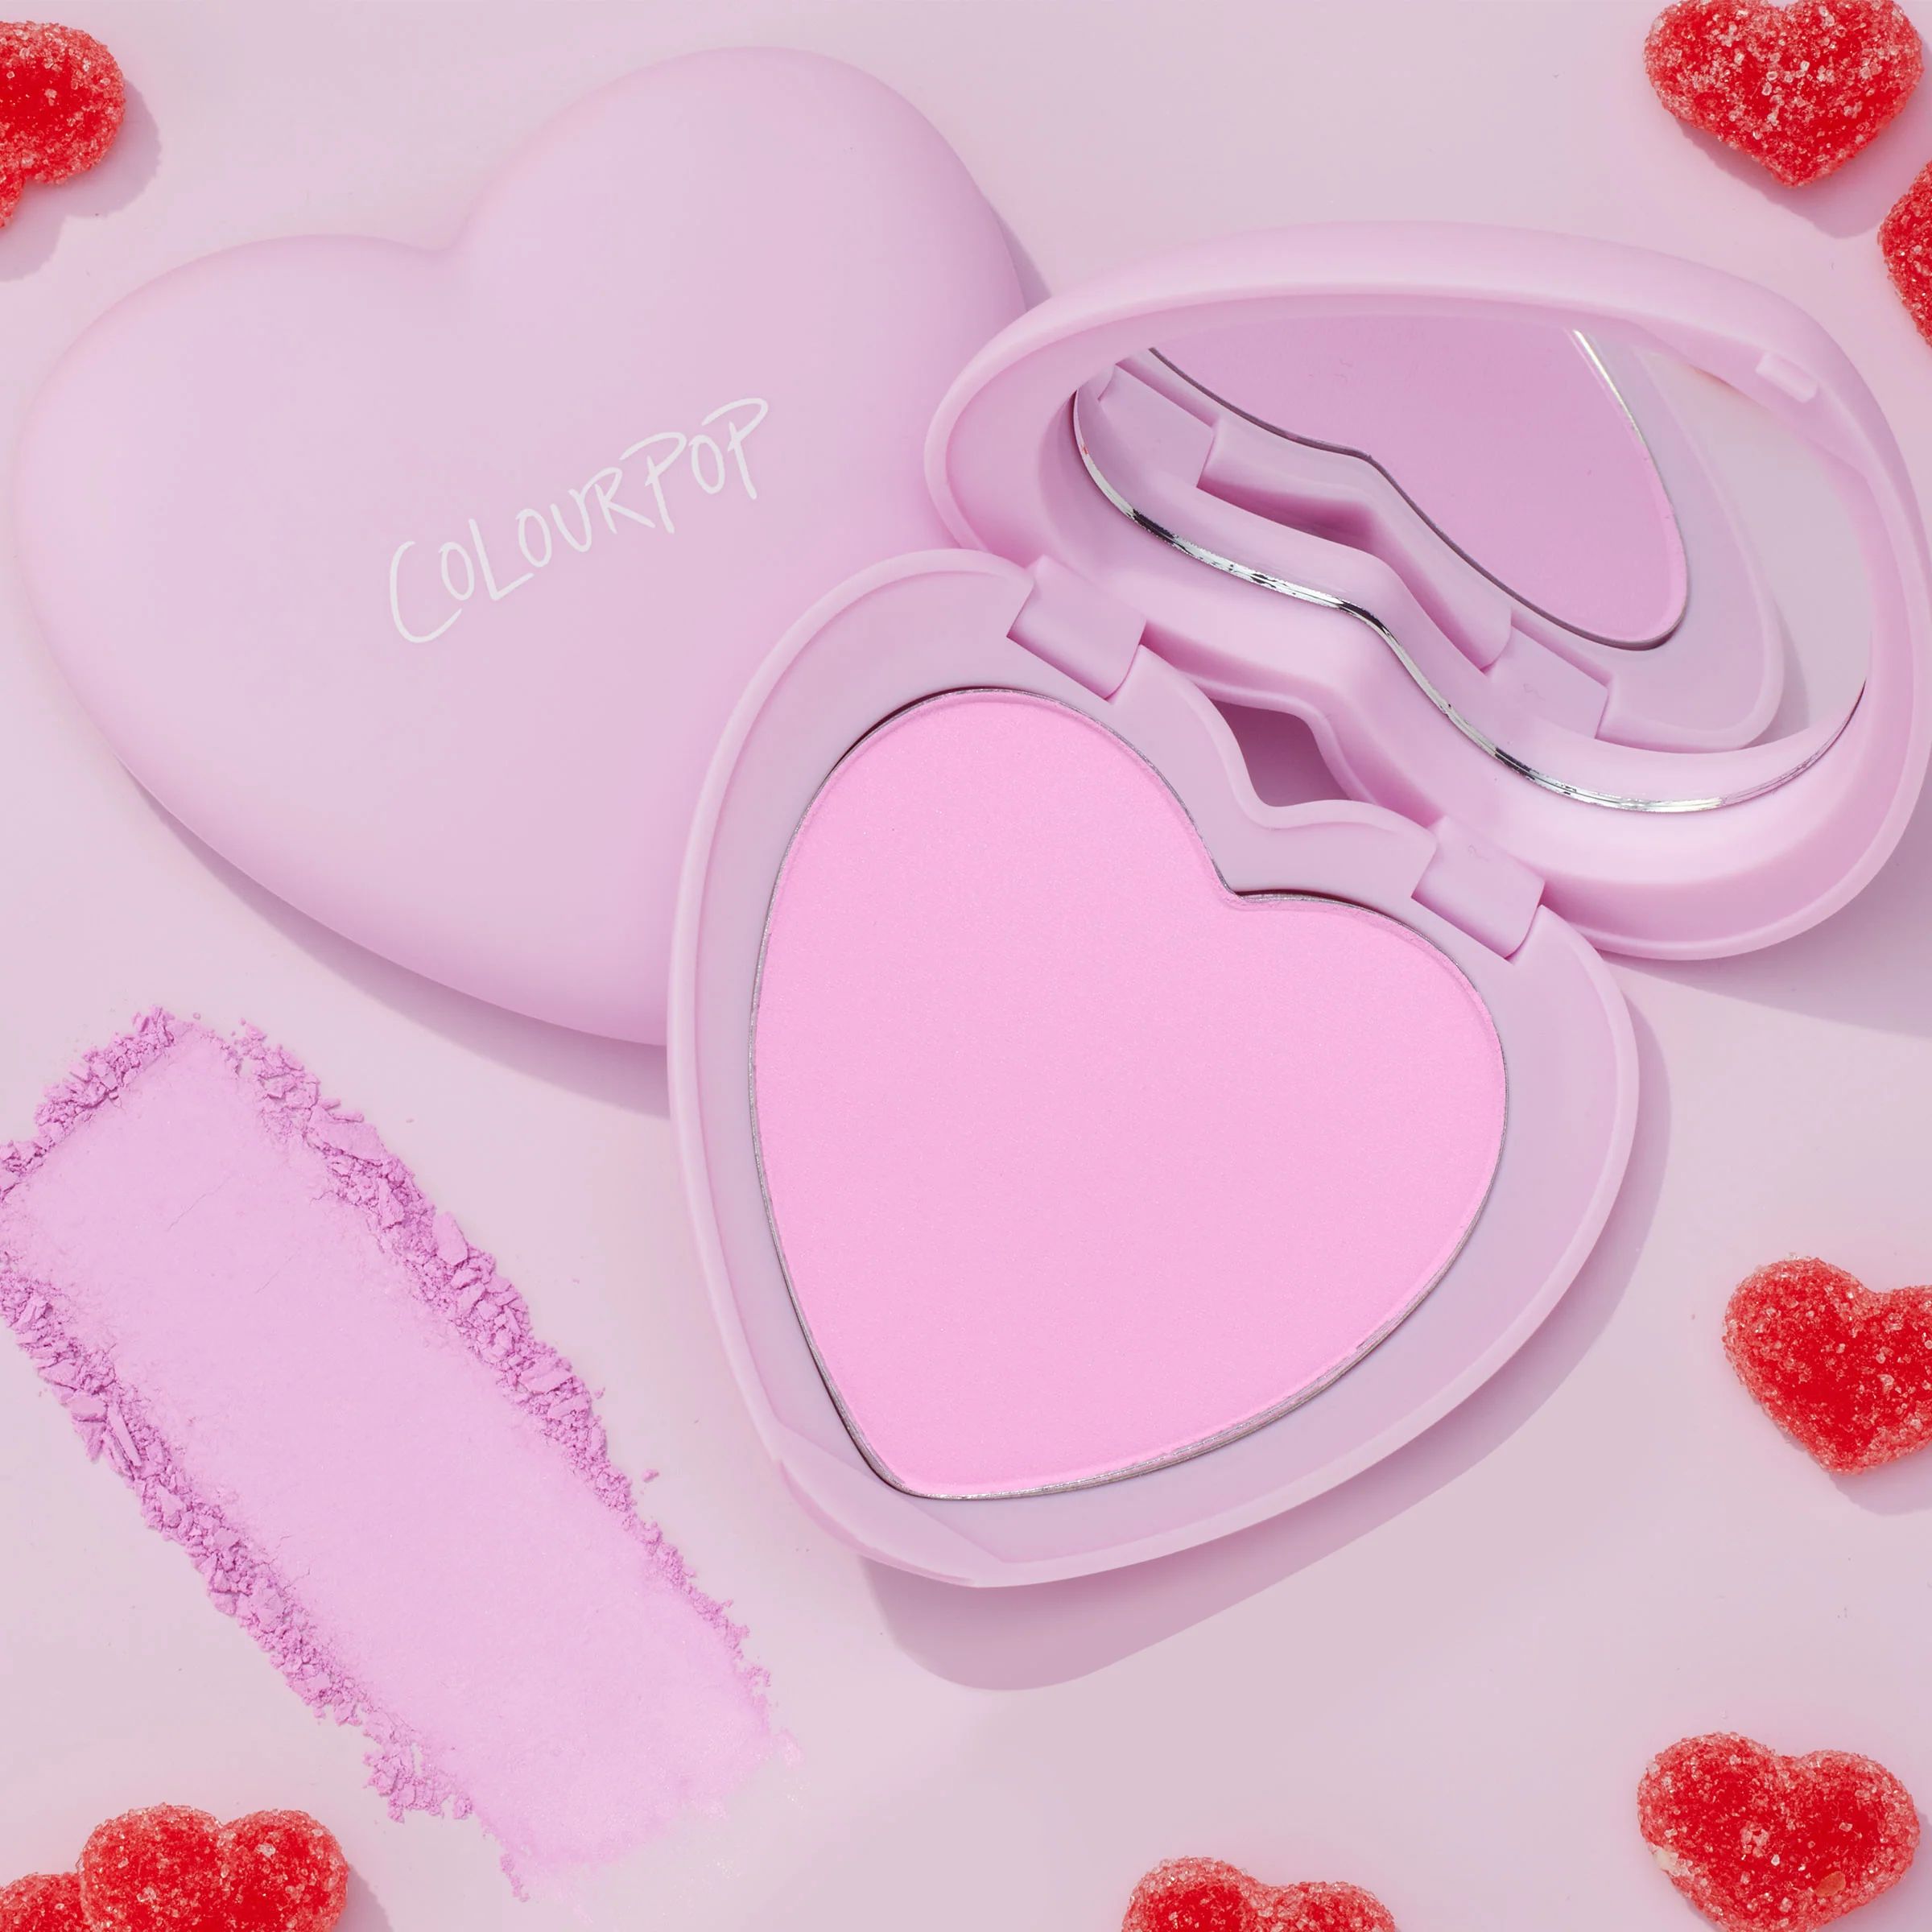 Cupid's Bow Pressed Powder Blush | Colourpop